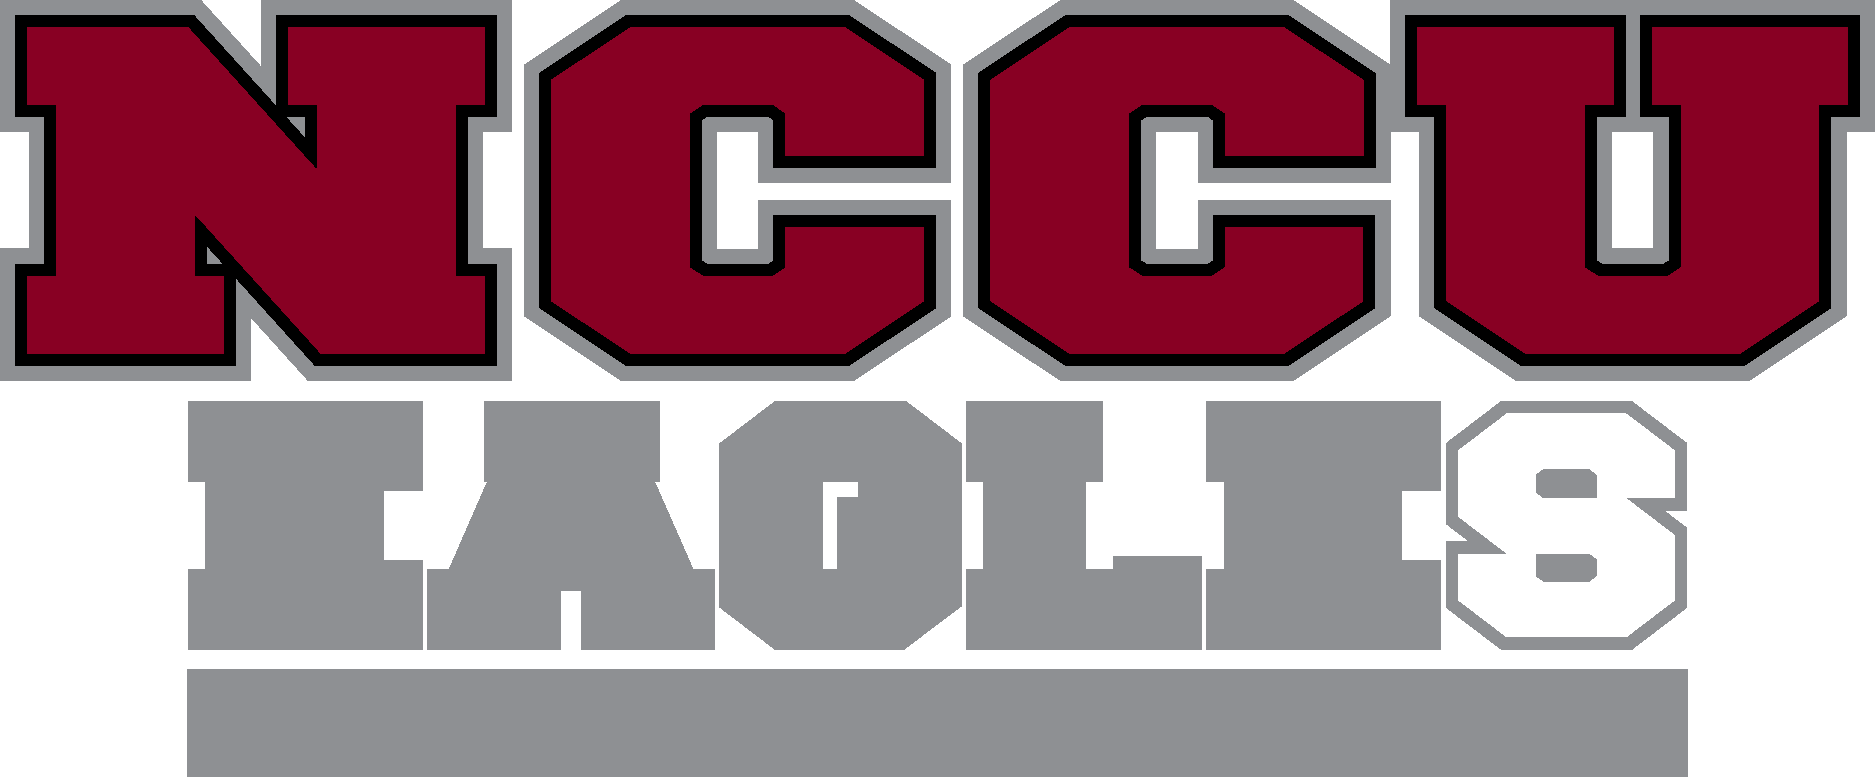 North Carolina Central Eagles Nccu Logo Vector - (.Ai .PNG .SVG .EPS ...